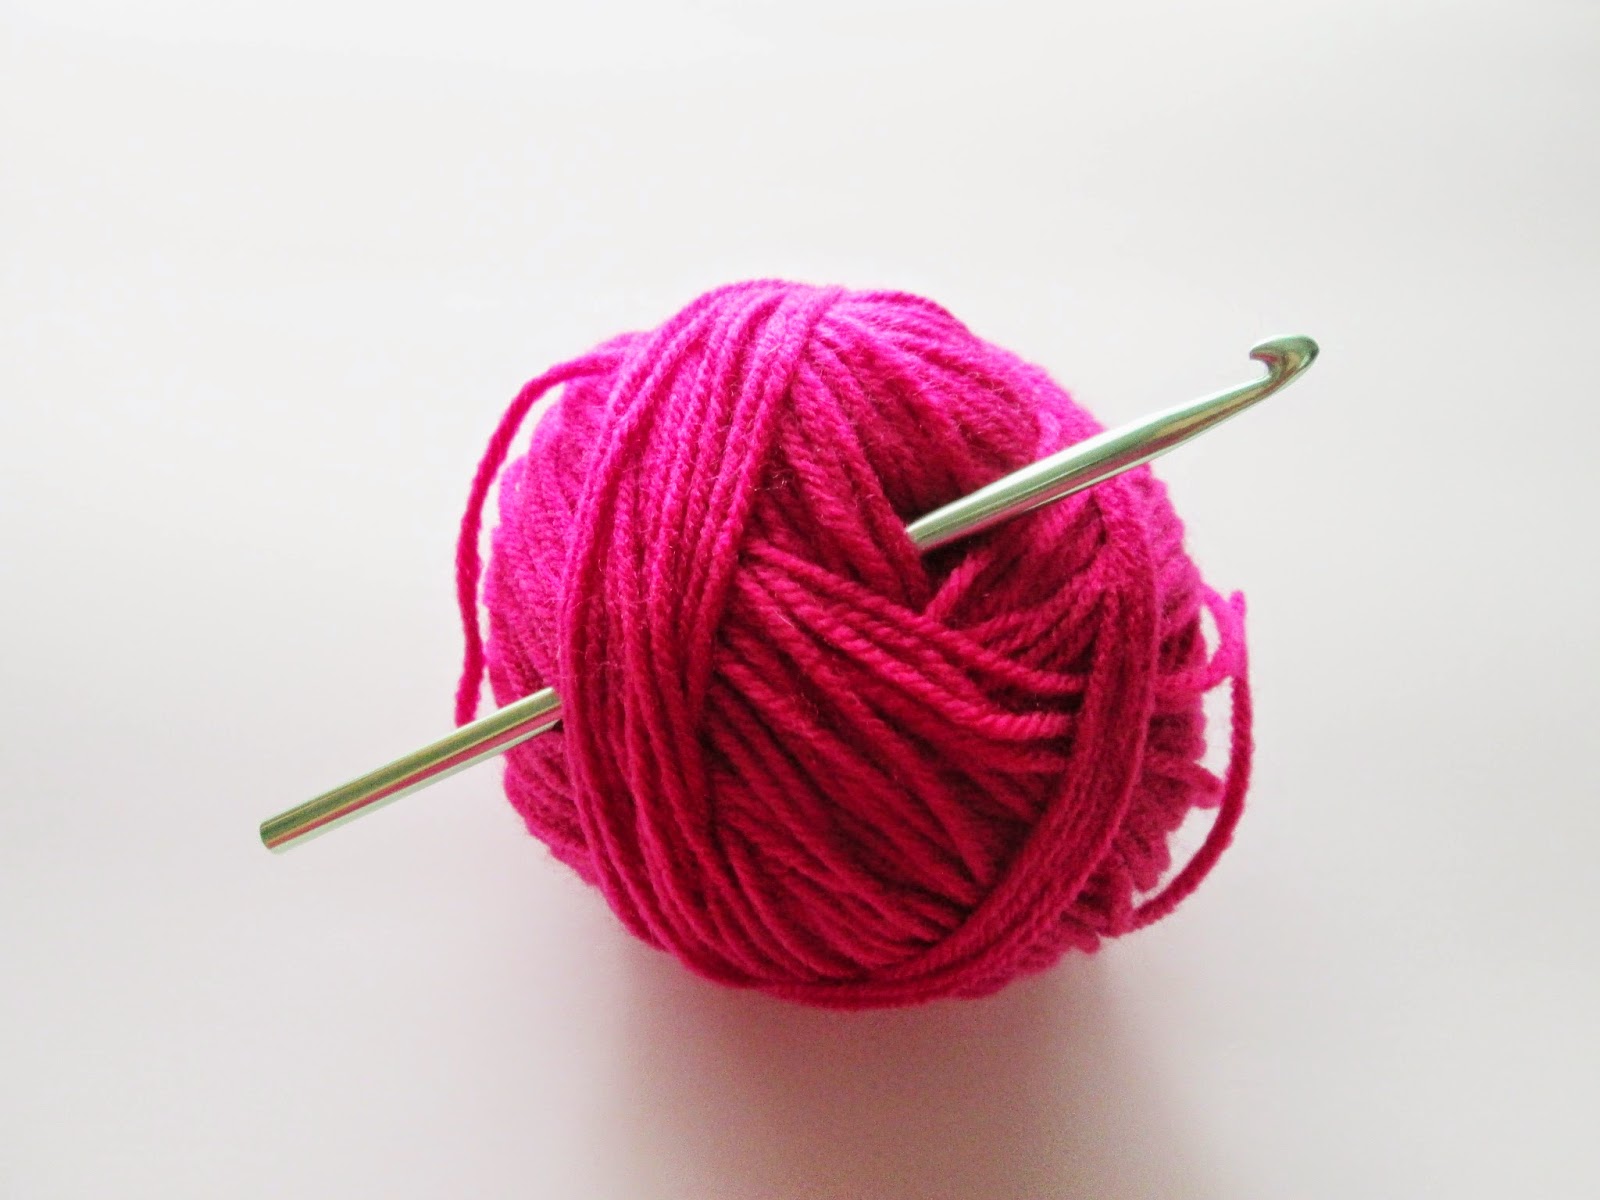 crochet hook and yarn clip art - photo #2